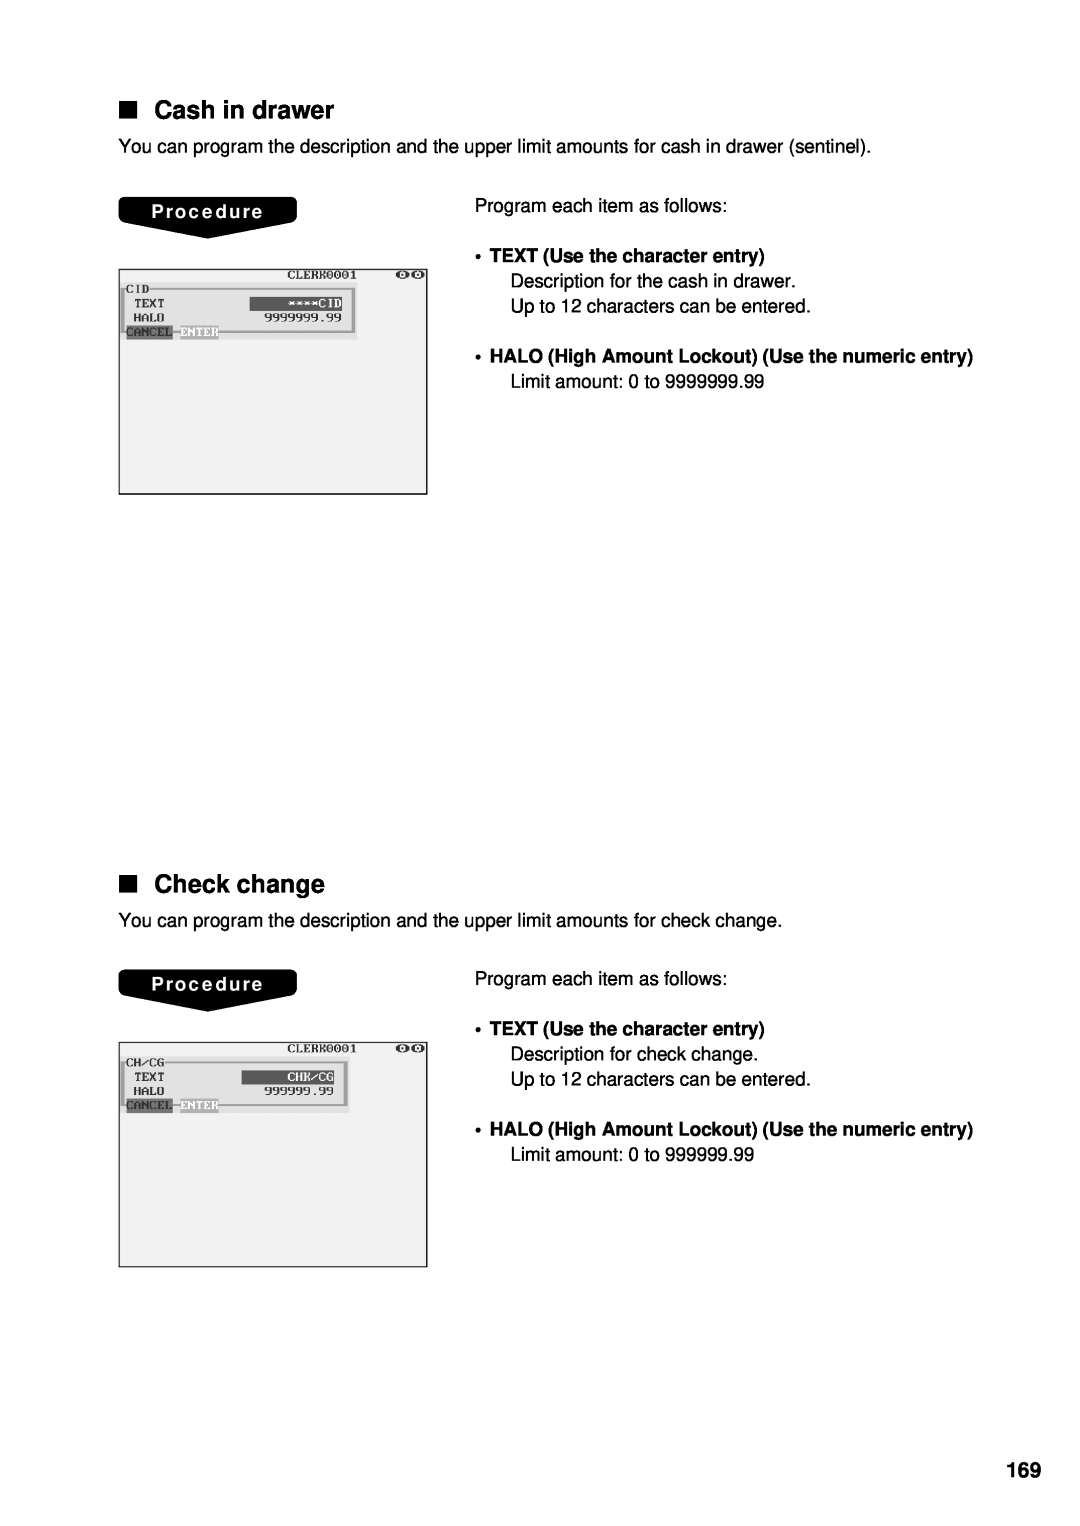 Sharp UP-3300 instruction manual Cash in drawer, Check change, Procedure 